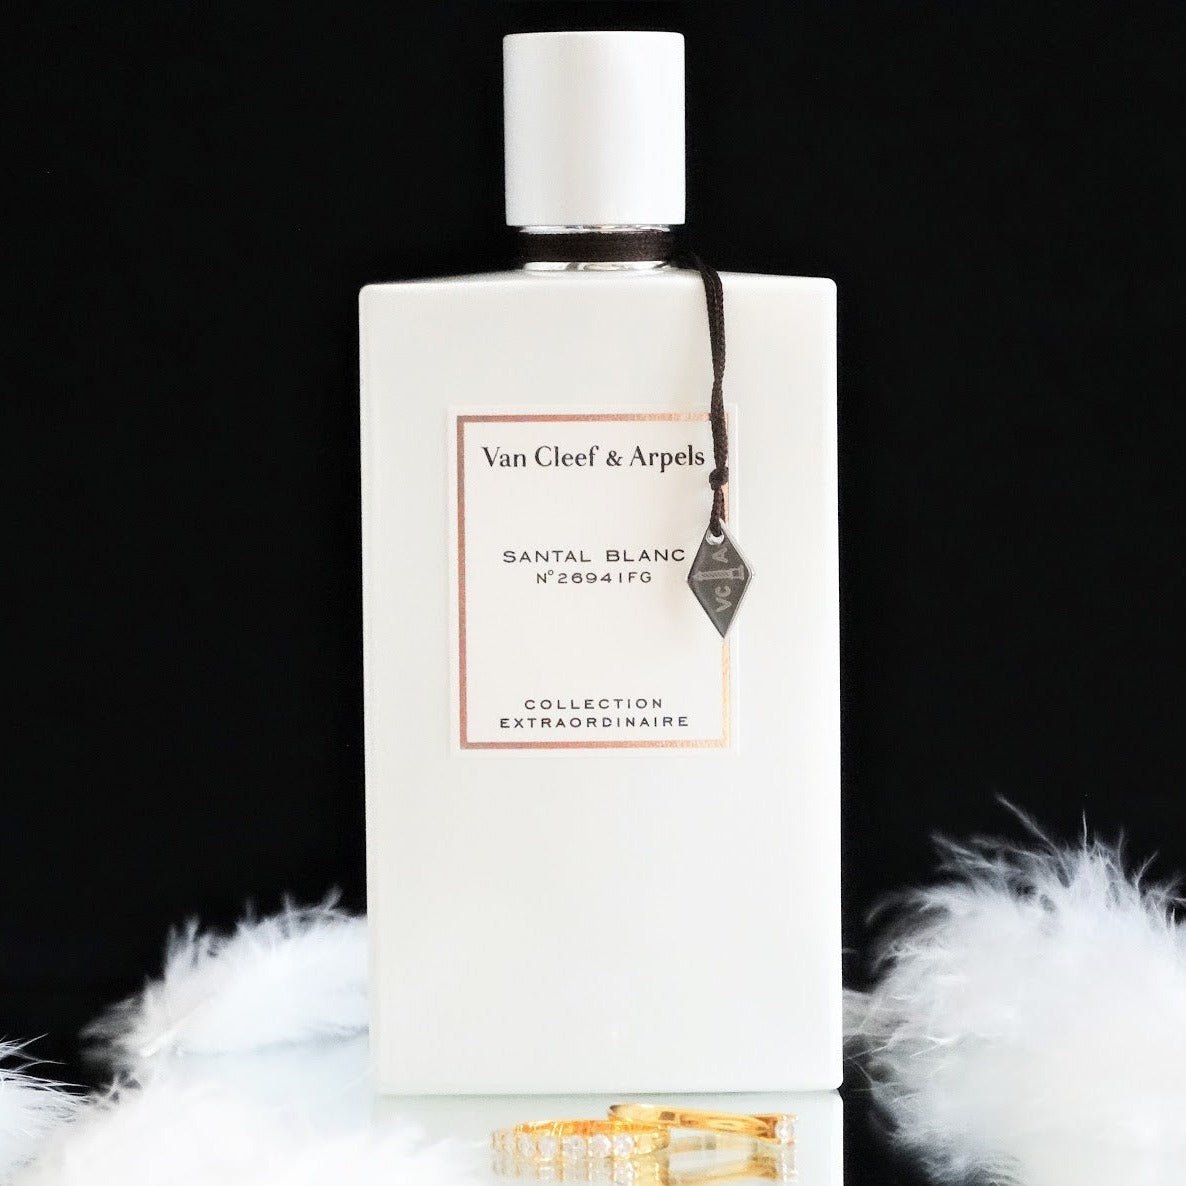 Van Cleef & Arpels Collection Extraordinaire Perfume Set | My Perfume Shop Australia